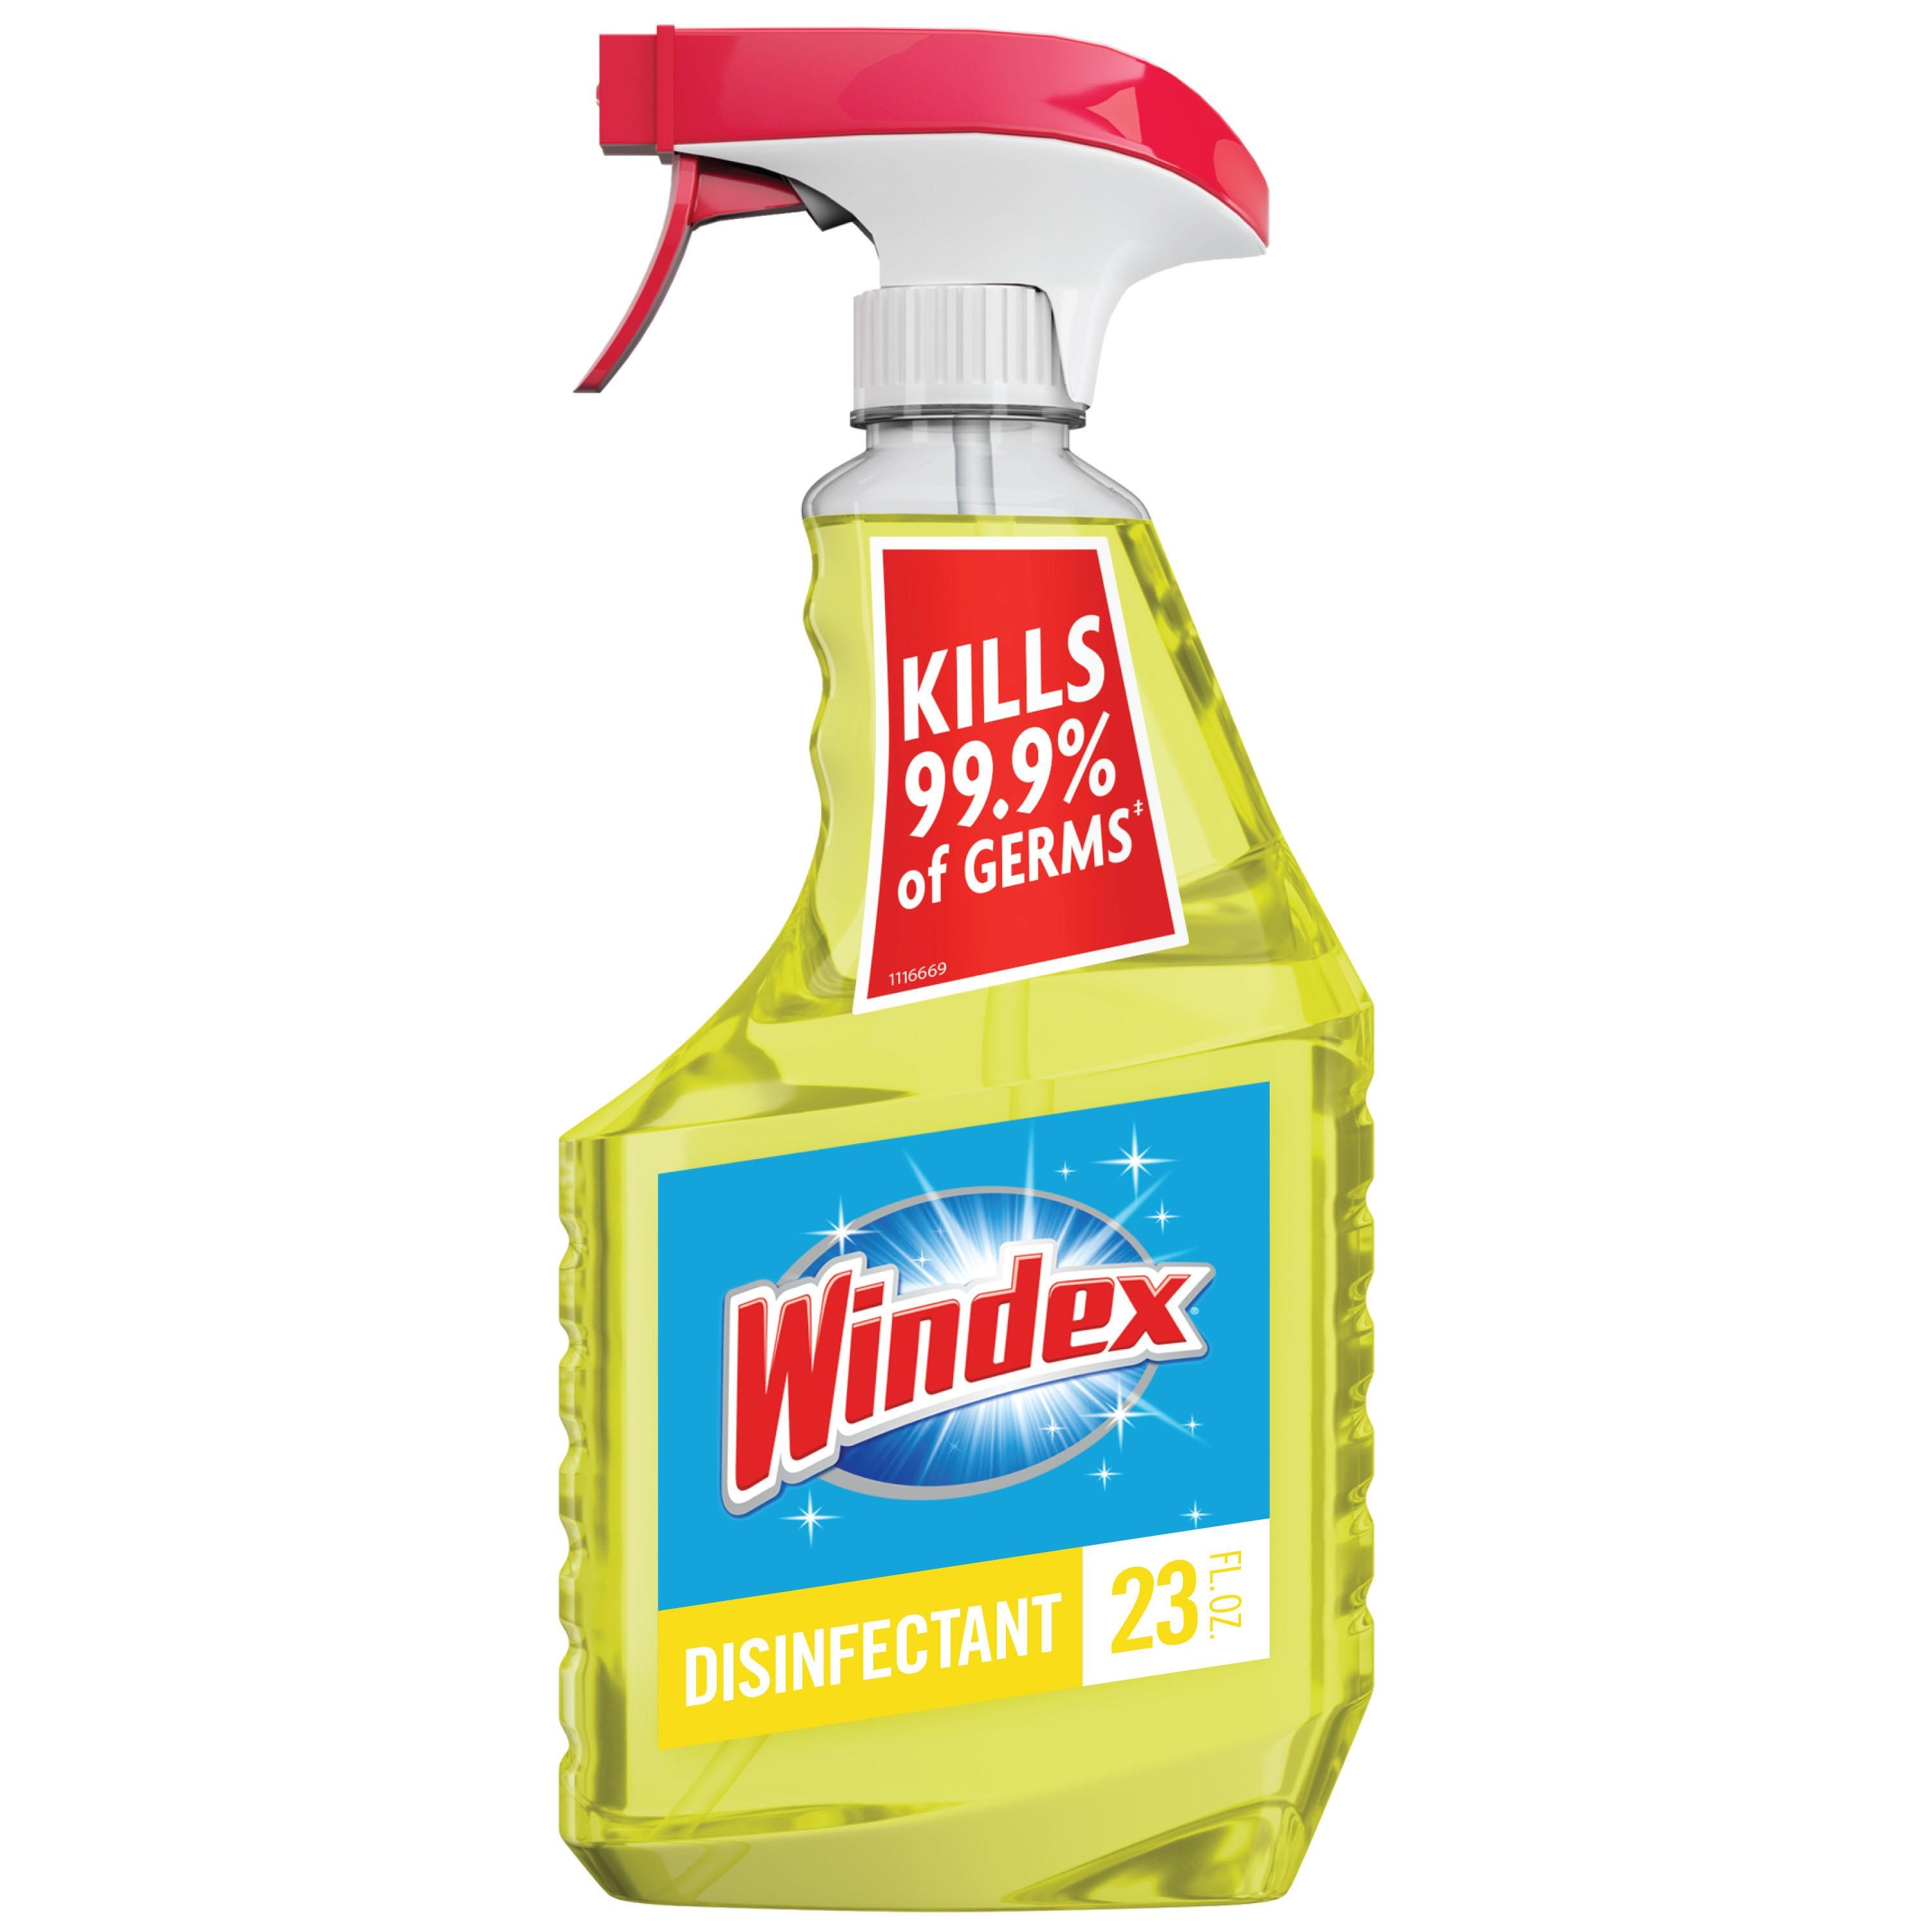 Windex Disinfectant Cleaner Multi-Surface Citrus Fresh, Spray Bottle, 23 Fl Oz - 23 Oz